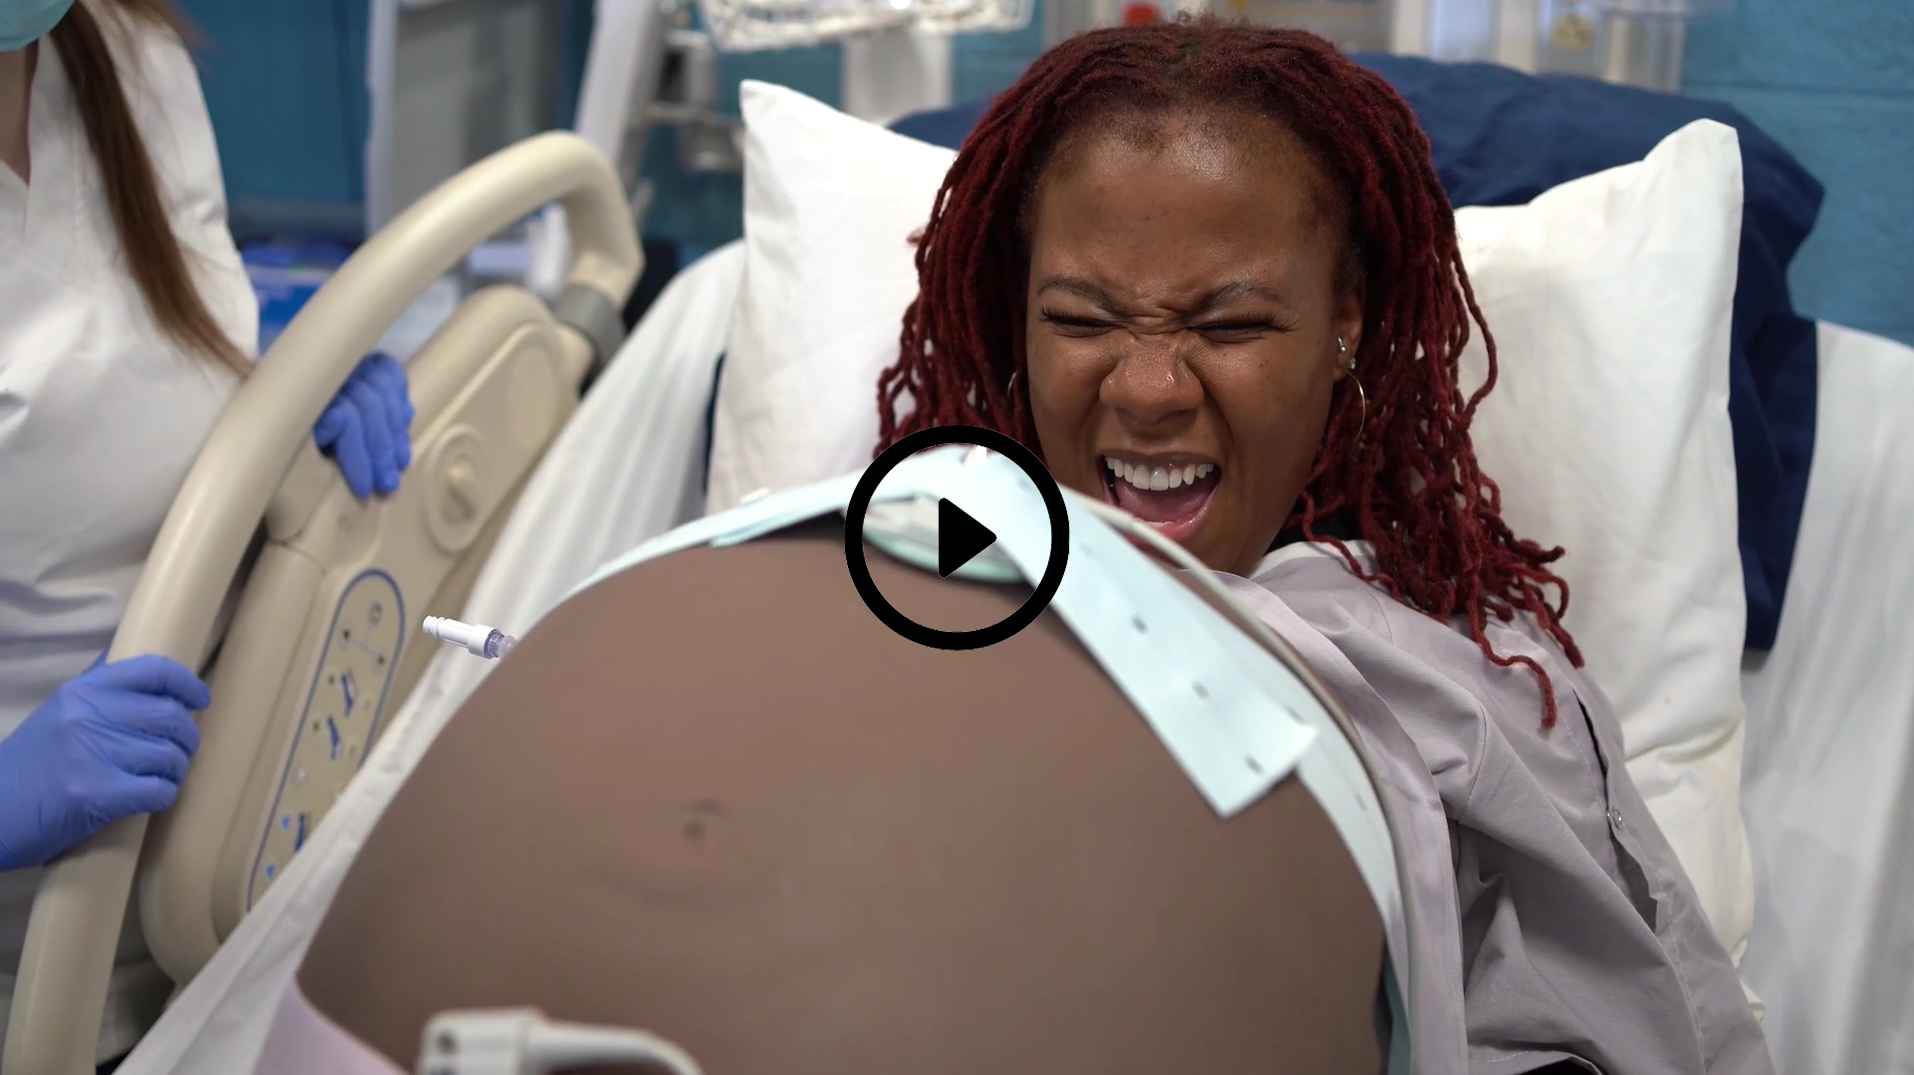 How Birth Simulators Work